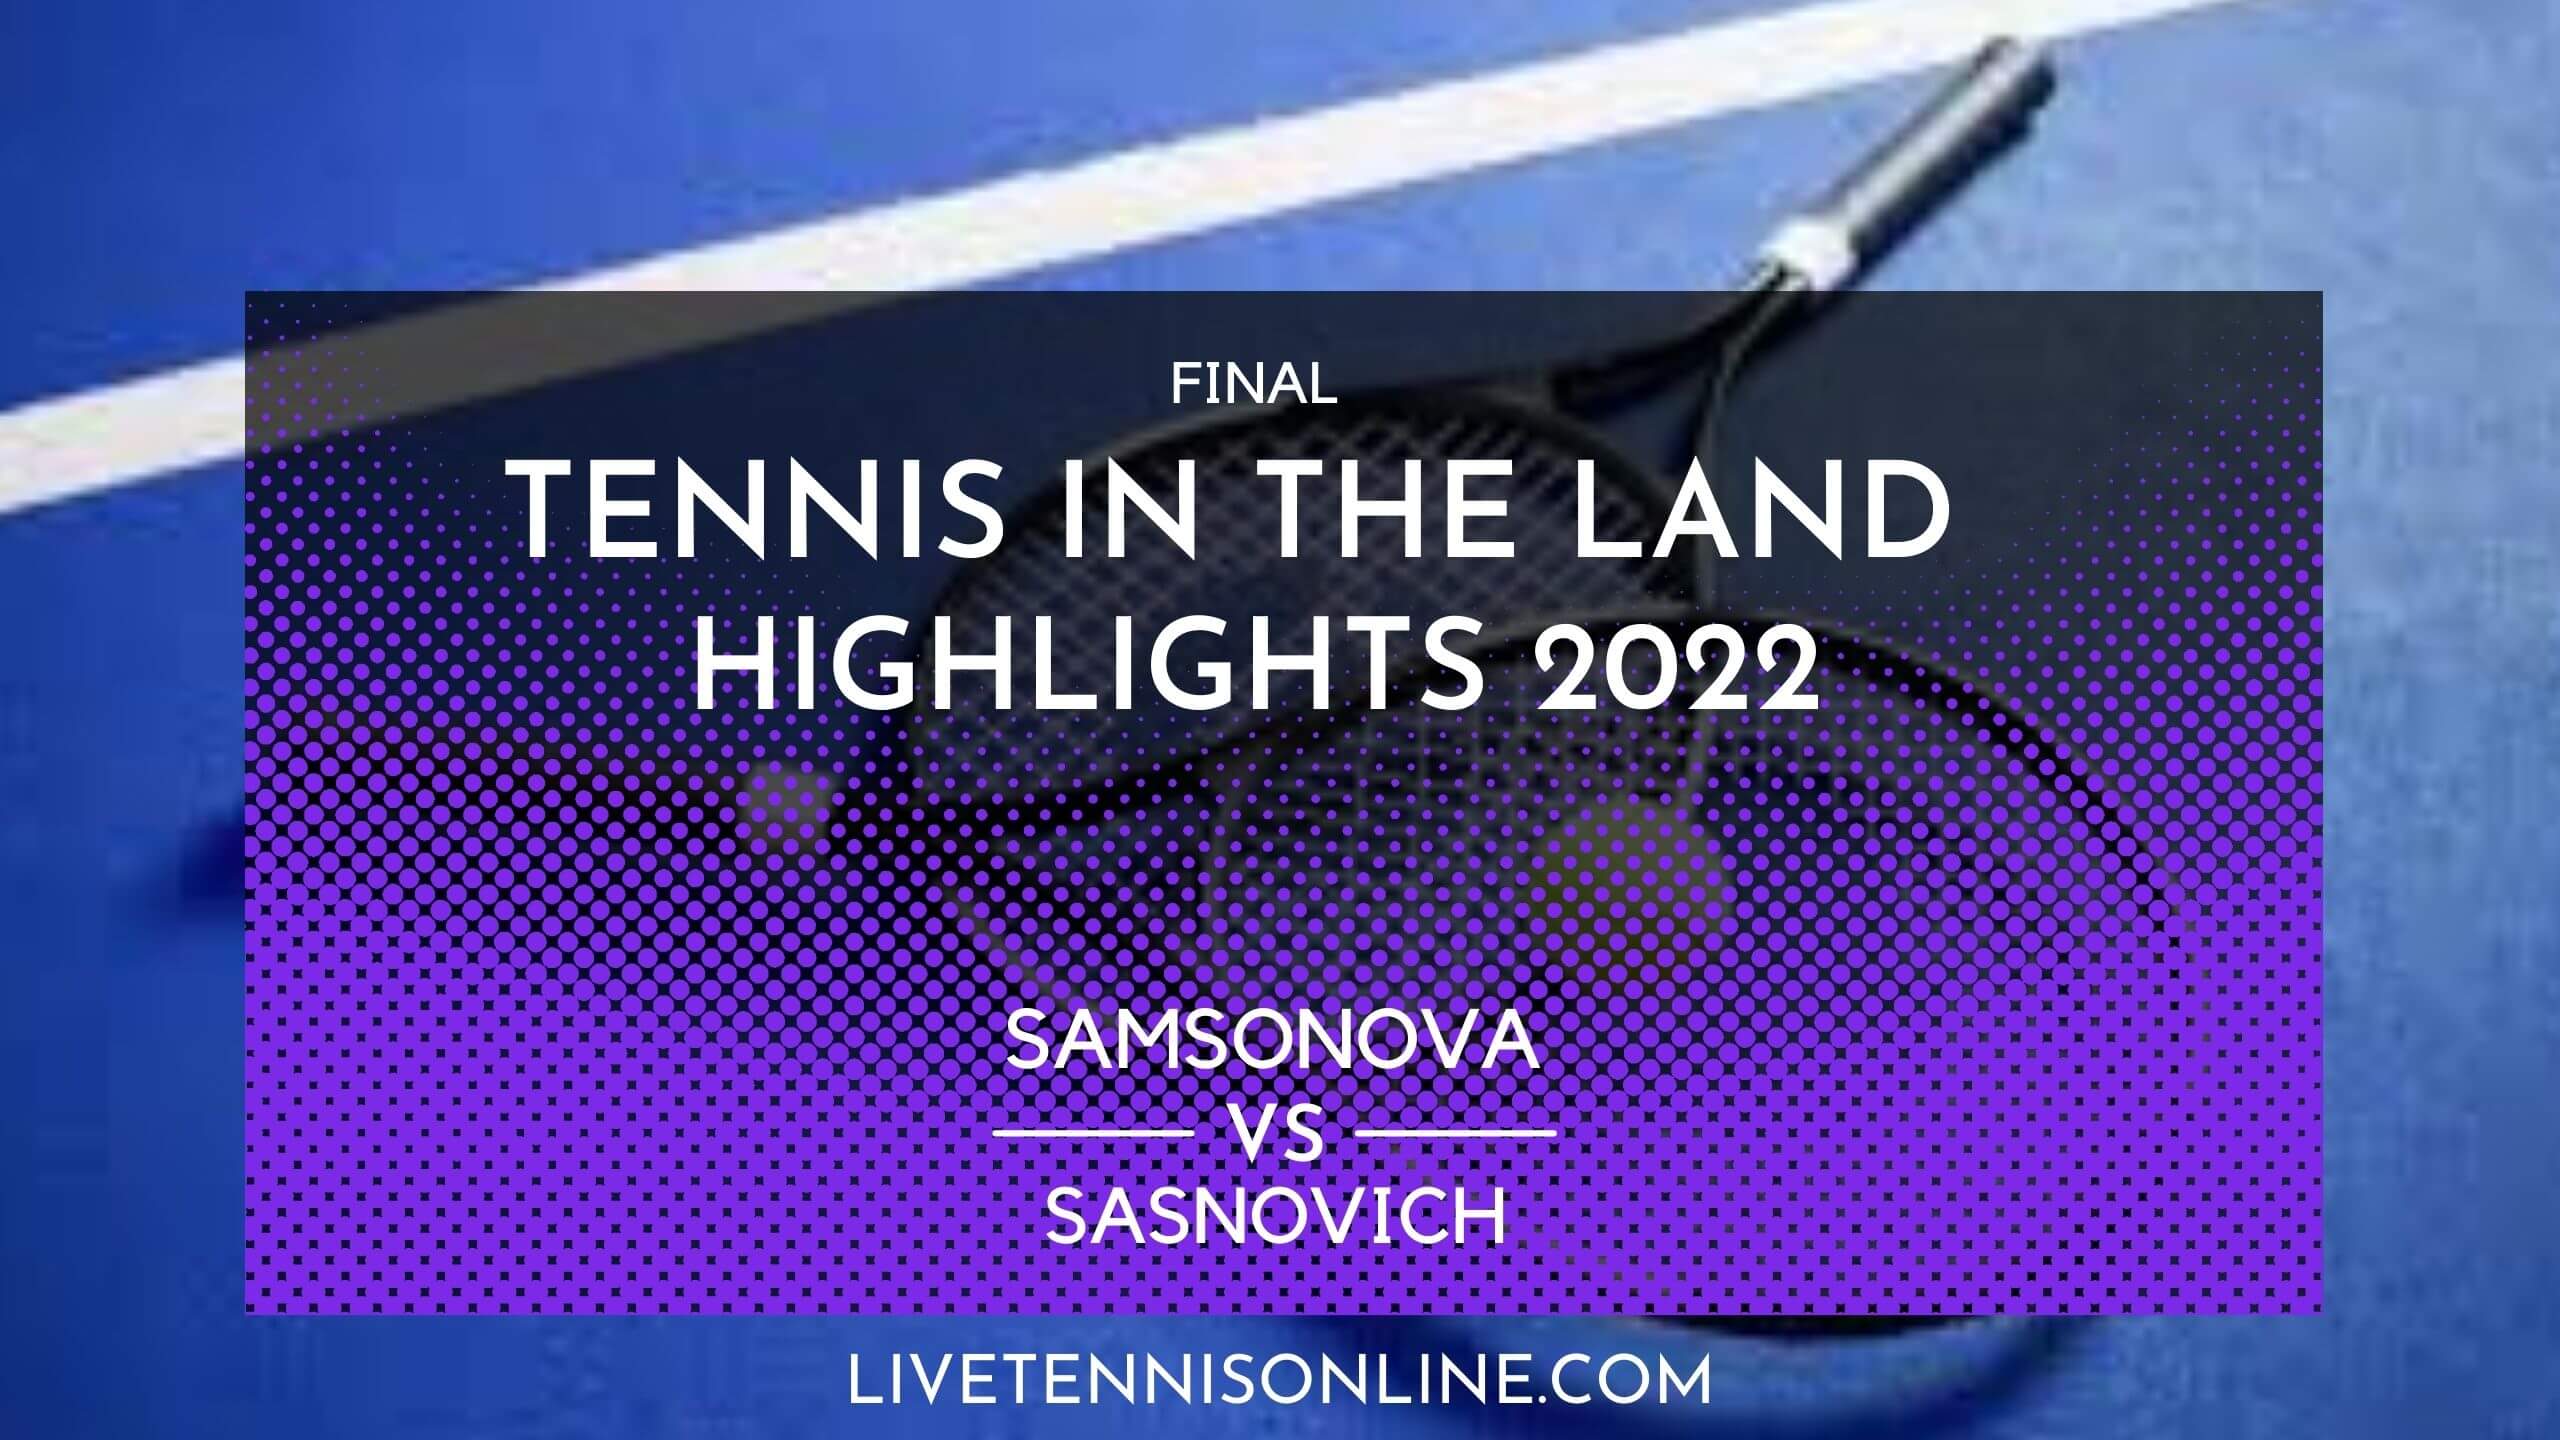 Samsonova Vs Sasnovich Final Highlights 2022 Tennis In The Land